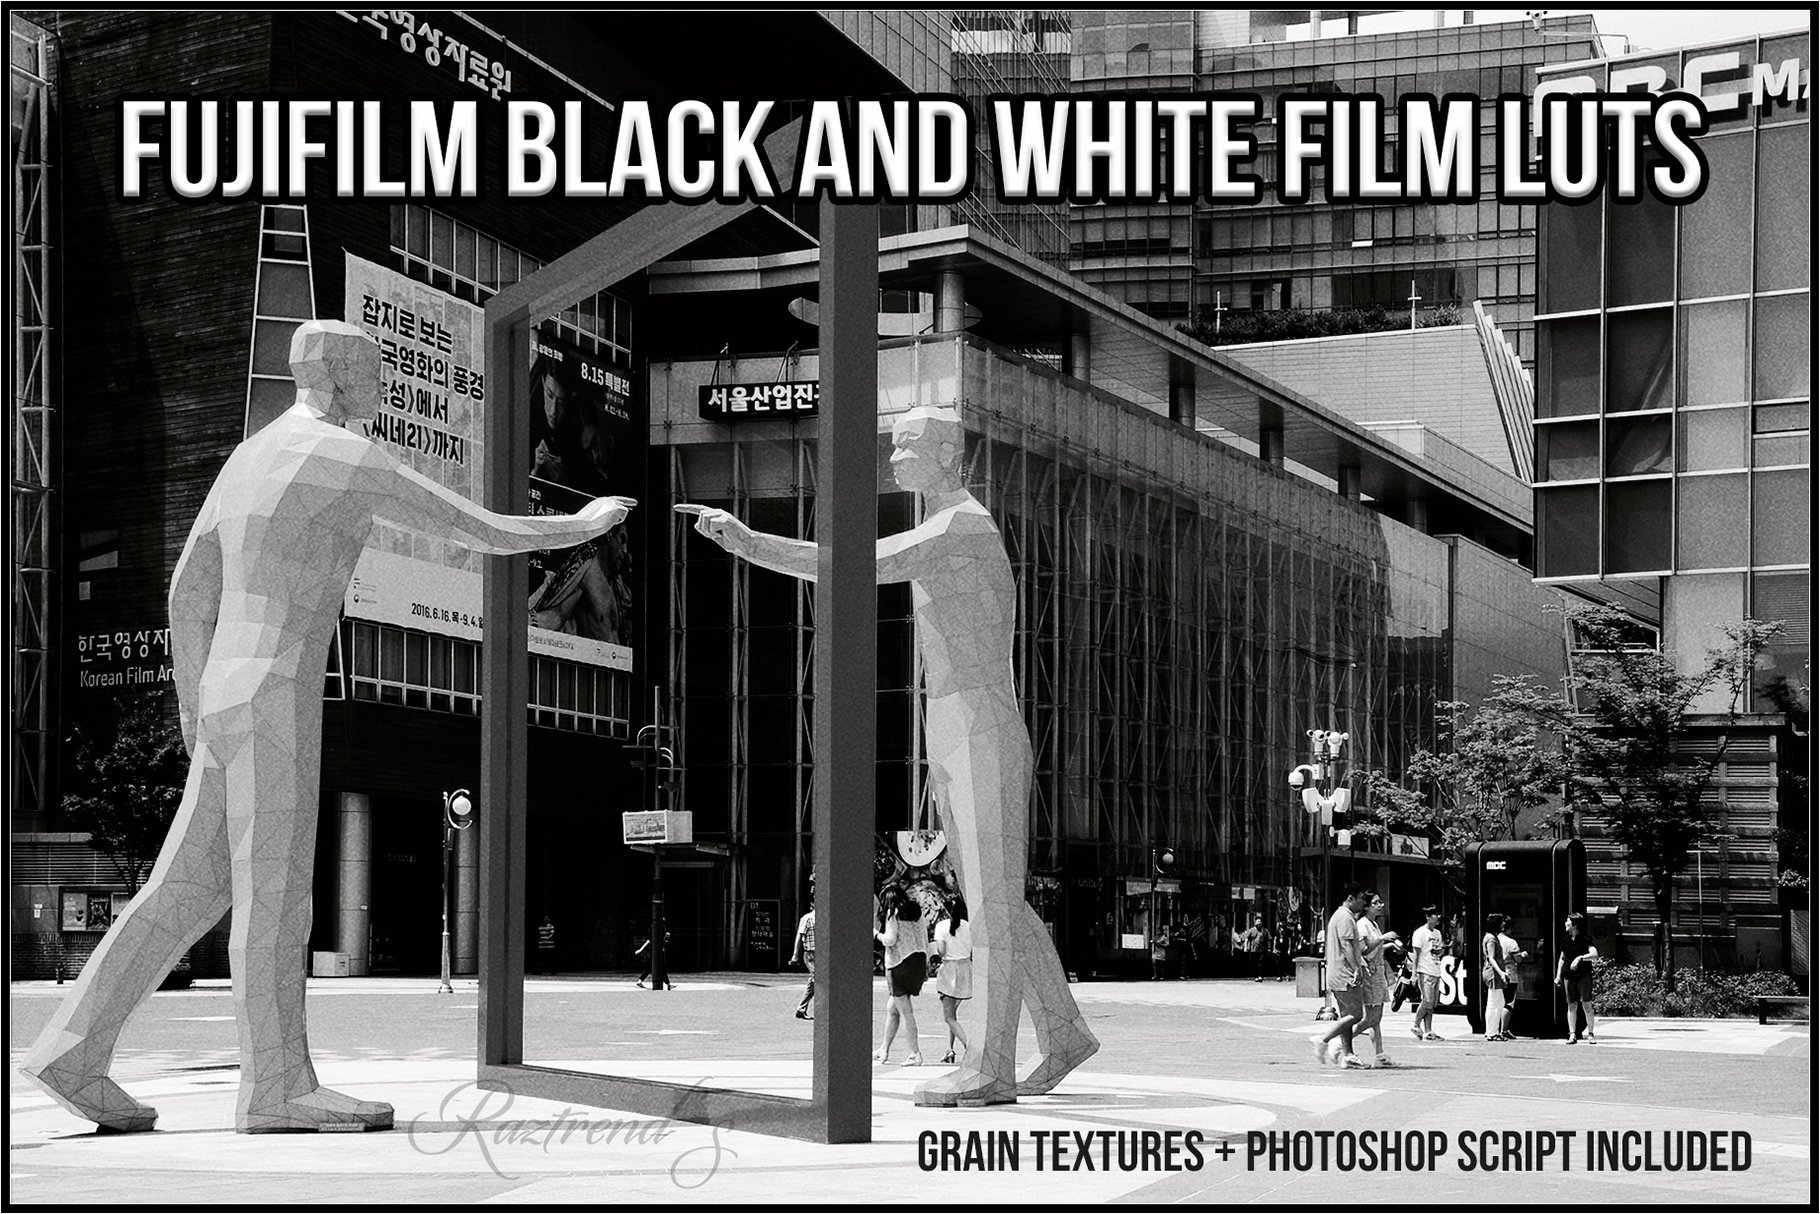 Fujifilm Black and White Film LUTscover image.